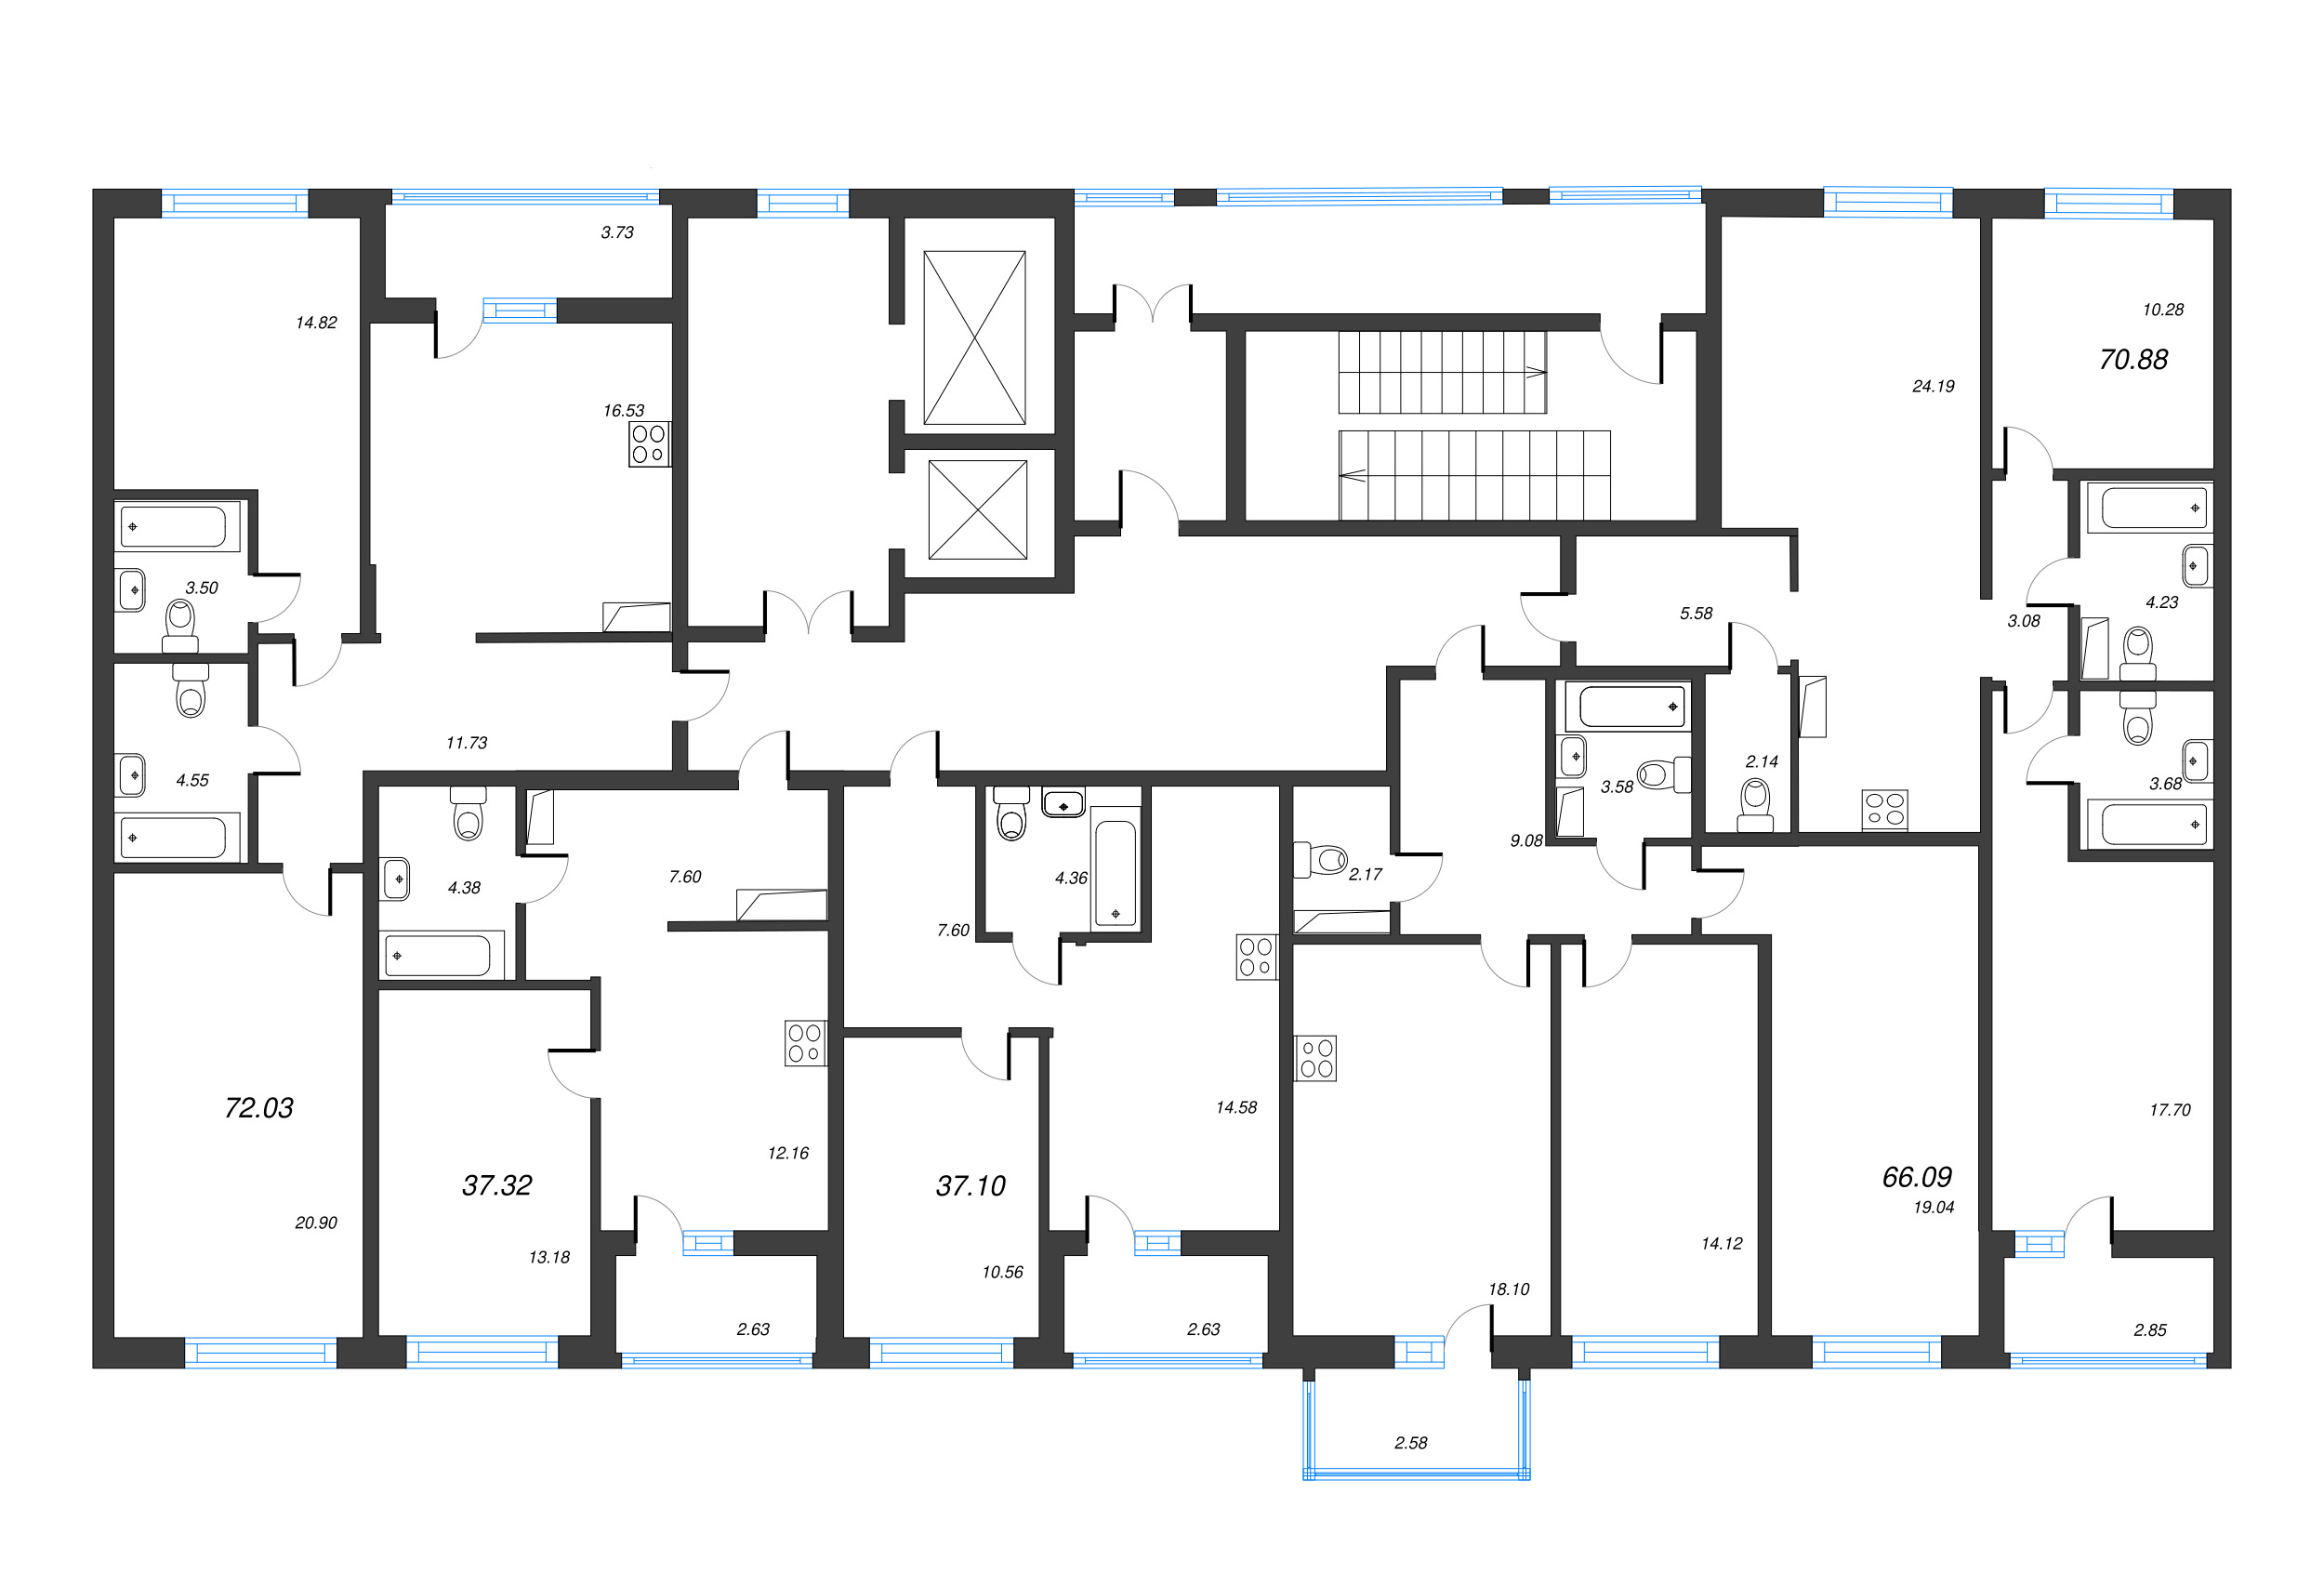 3-комнатная (Евро) квартира, 70.88 м² - планировка этажа